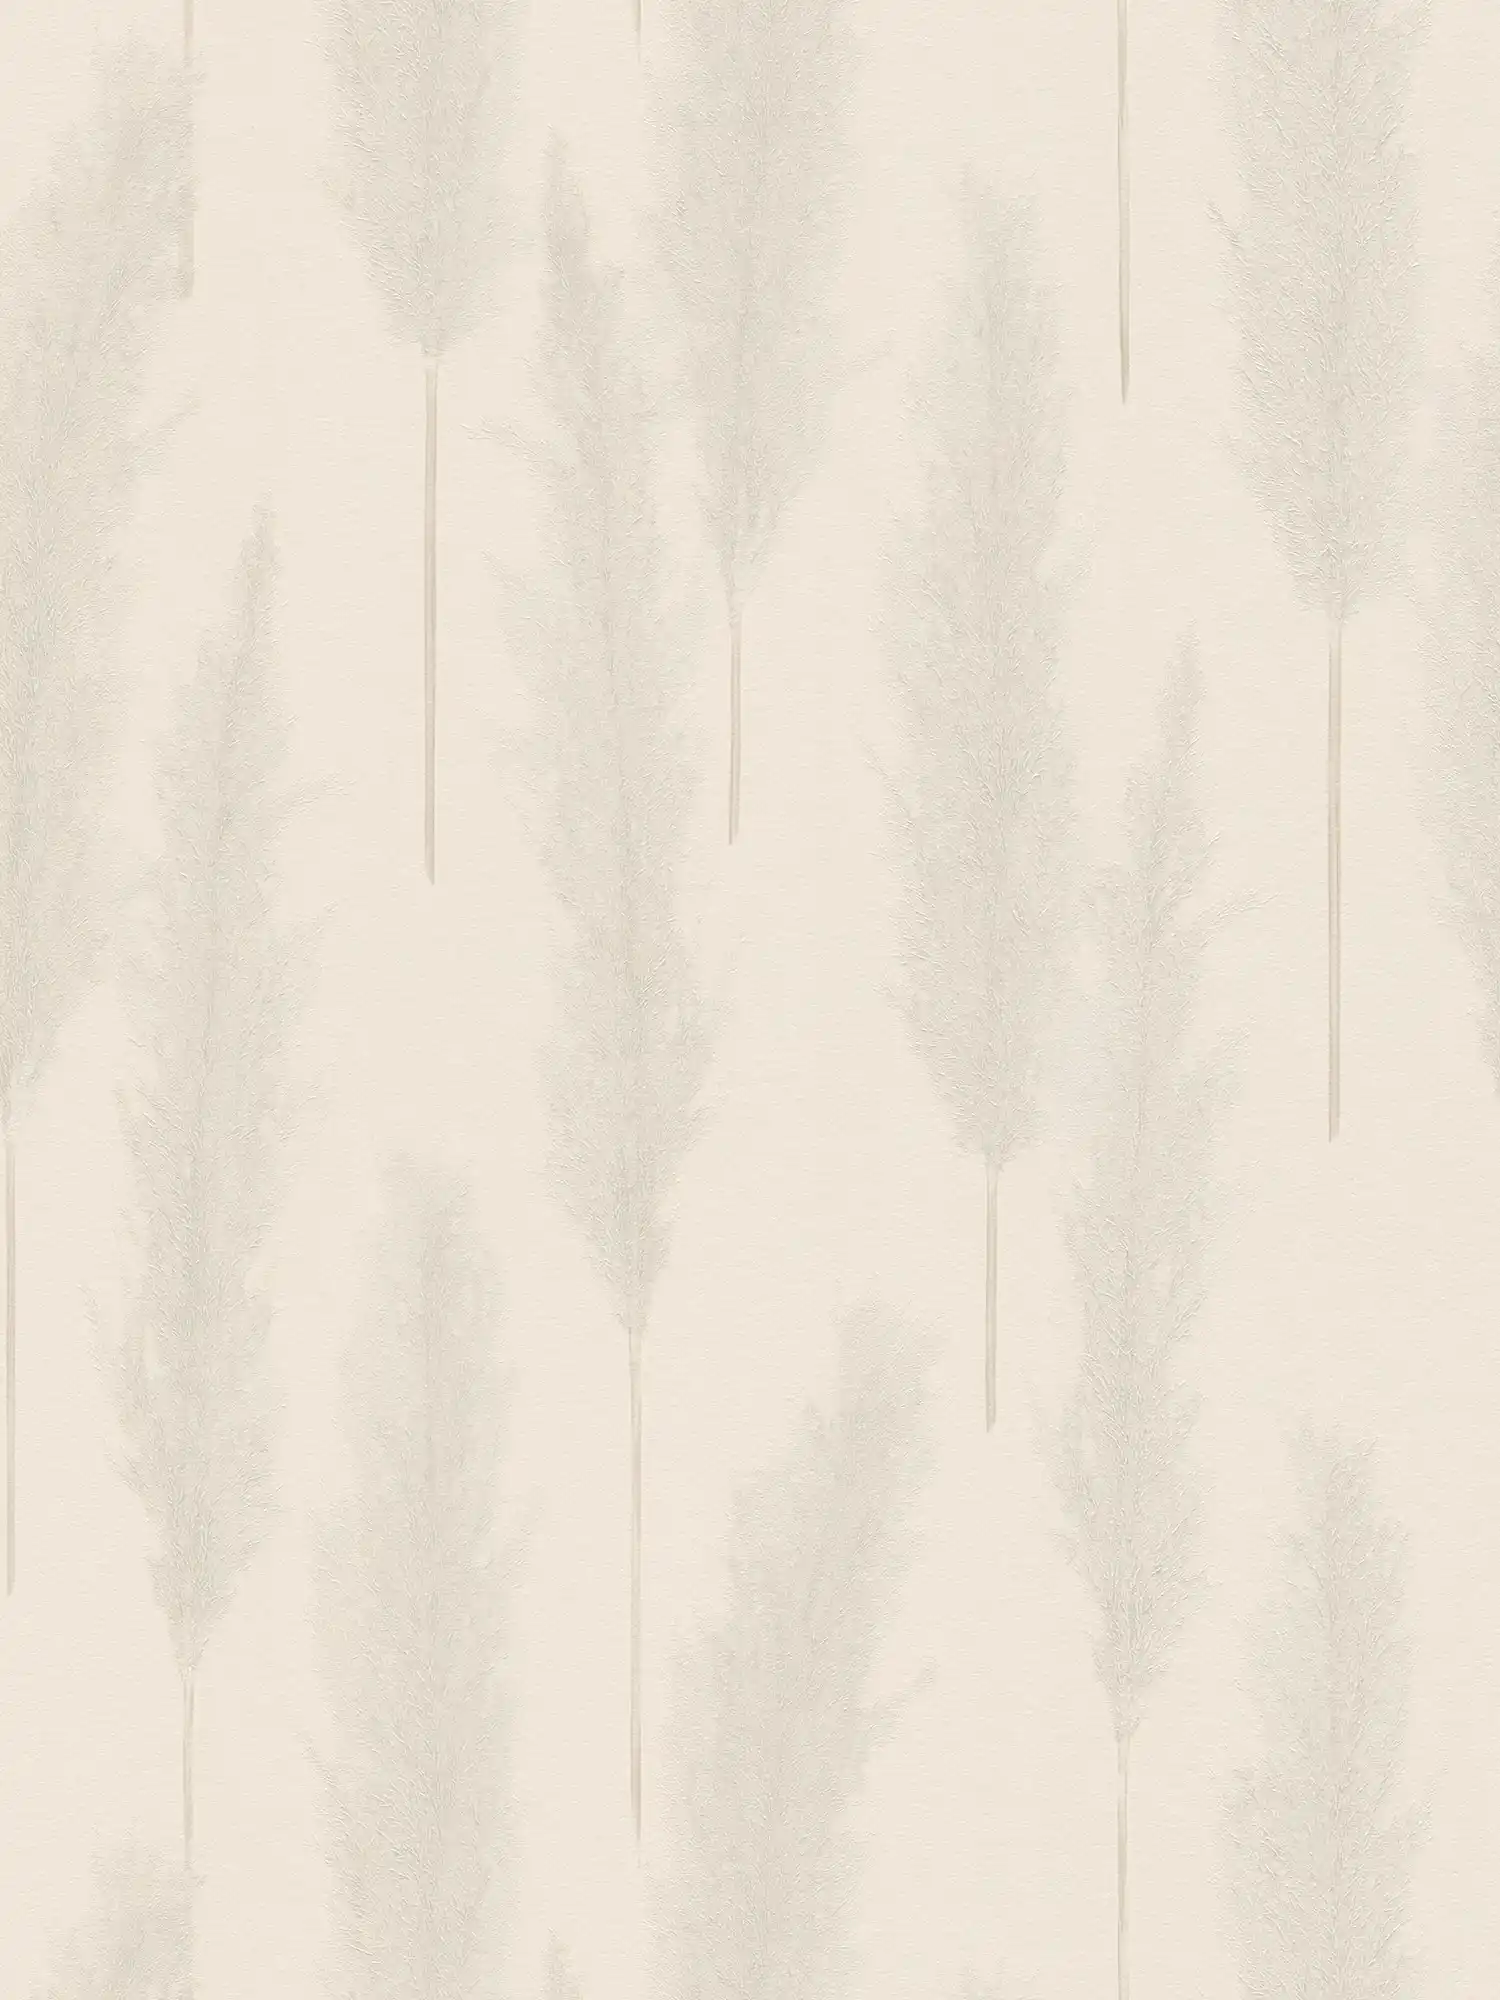 Wallpaper with pampas grass pattern - beige, grey, white
